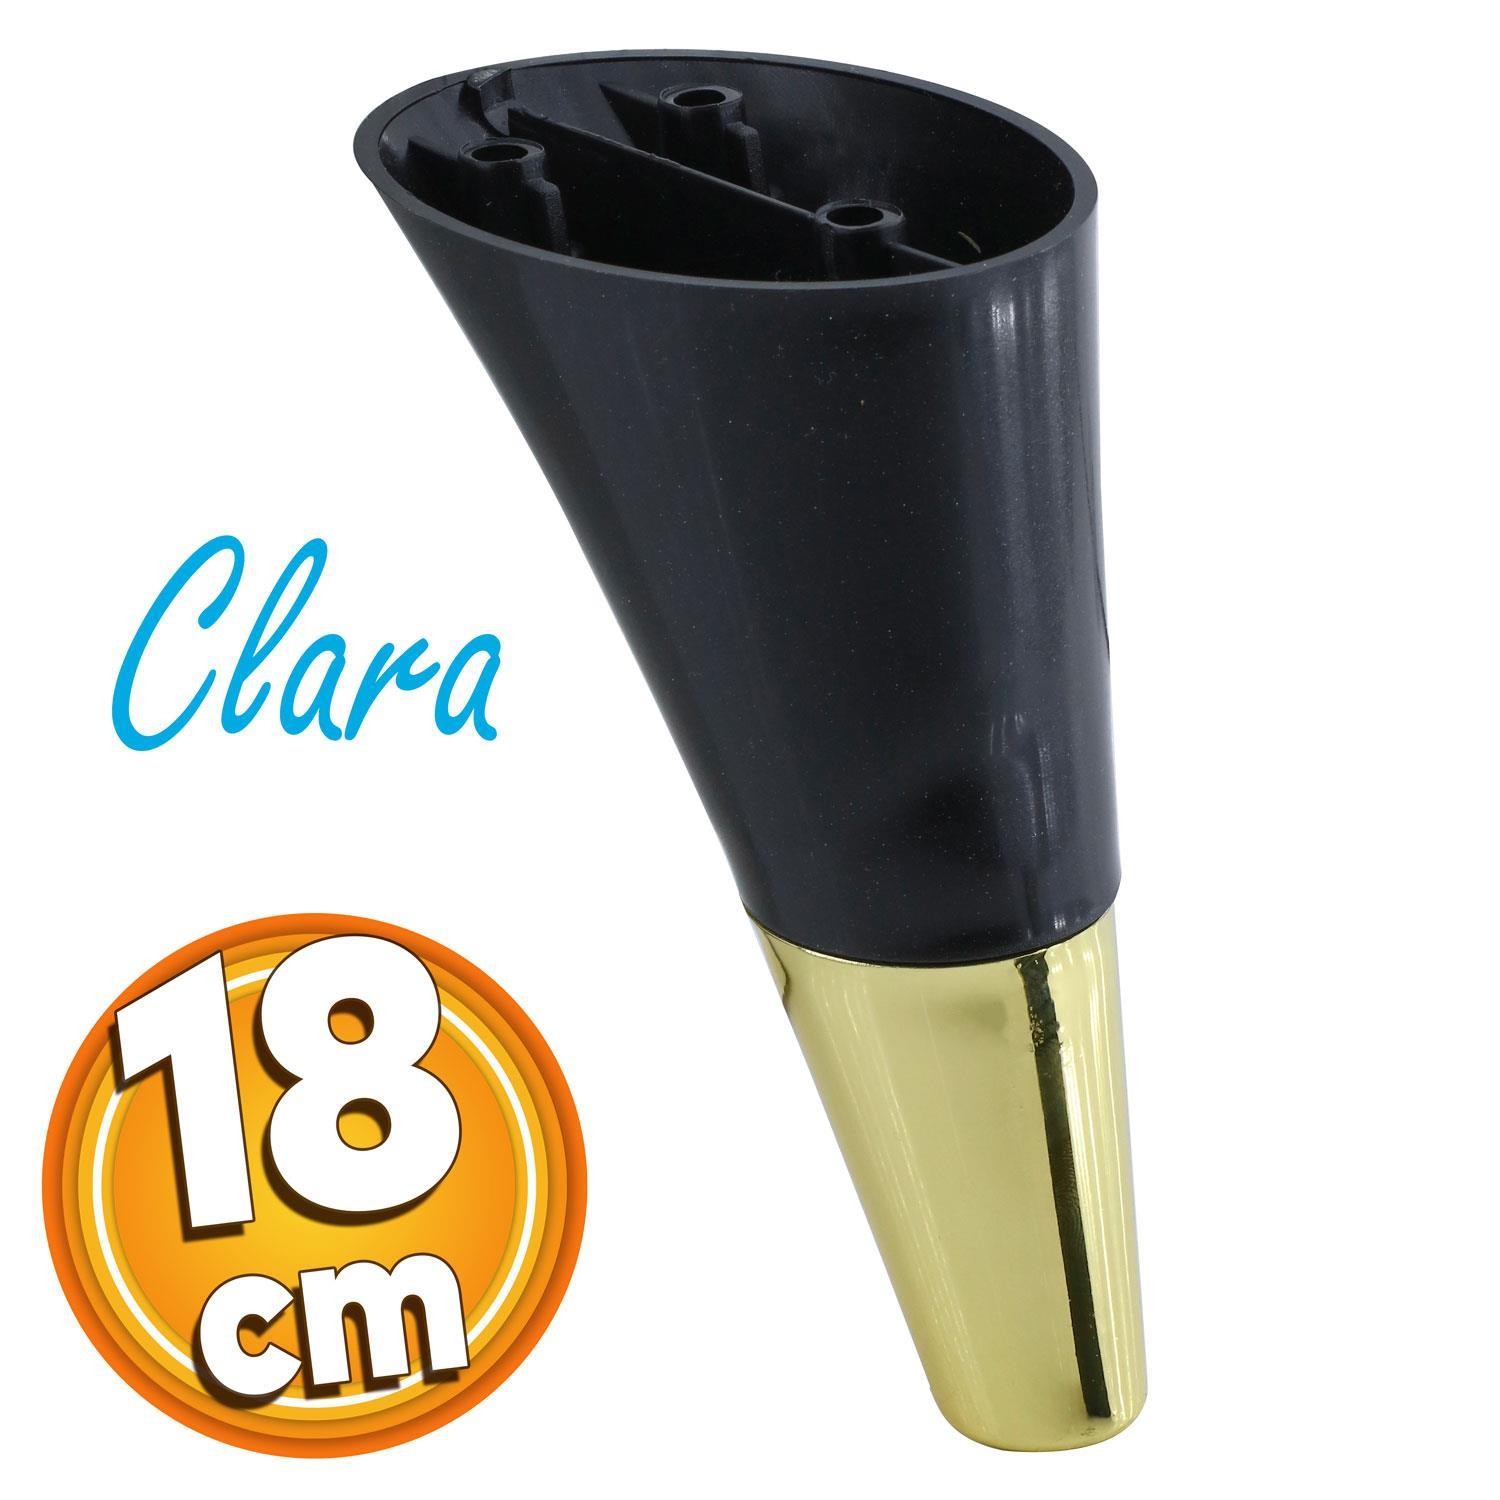 Clara Mobilya Kanepe Sehpa TV Ünitesi Baza Koltuk Ayağı Siyah Gold Renk 18 cm (4 Adet)